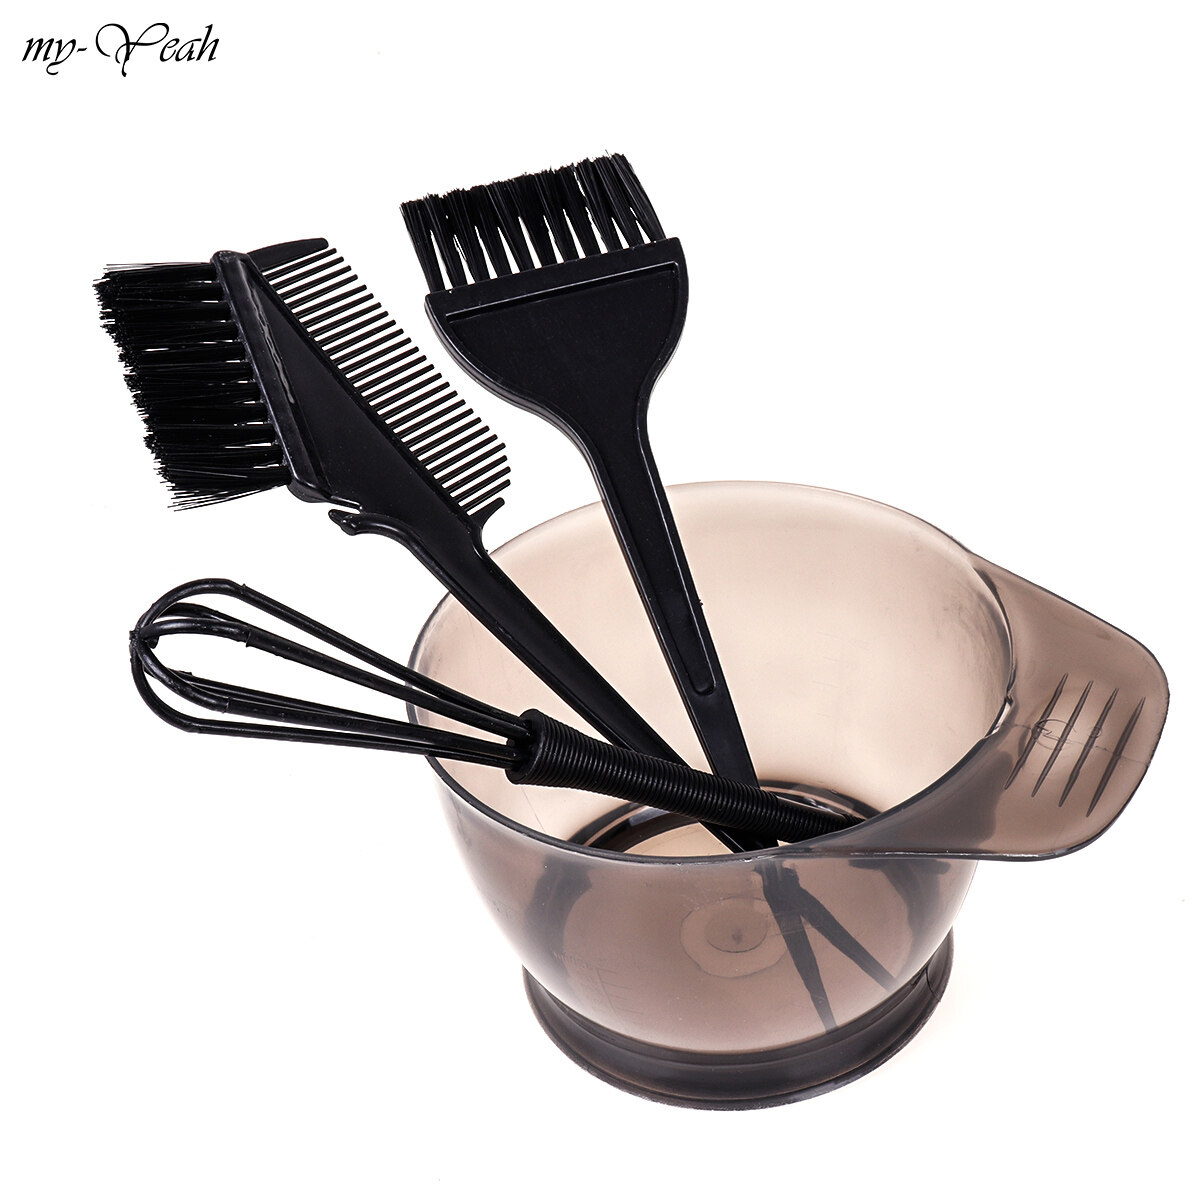 myyeah 5pcs/set Hair Bowl Comb Brushes Tools Hair Color Mixer Barber Salon  Tint Hairdressing Styling Set DIY Home-Black | Lazada